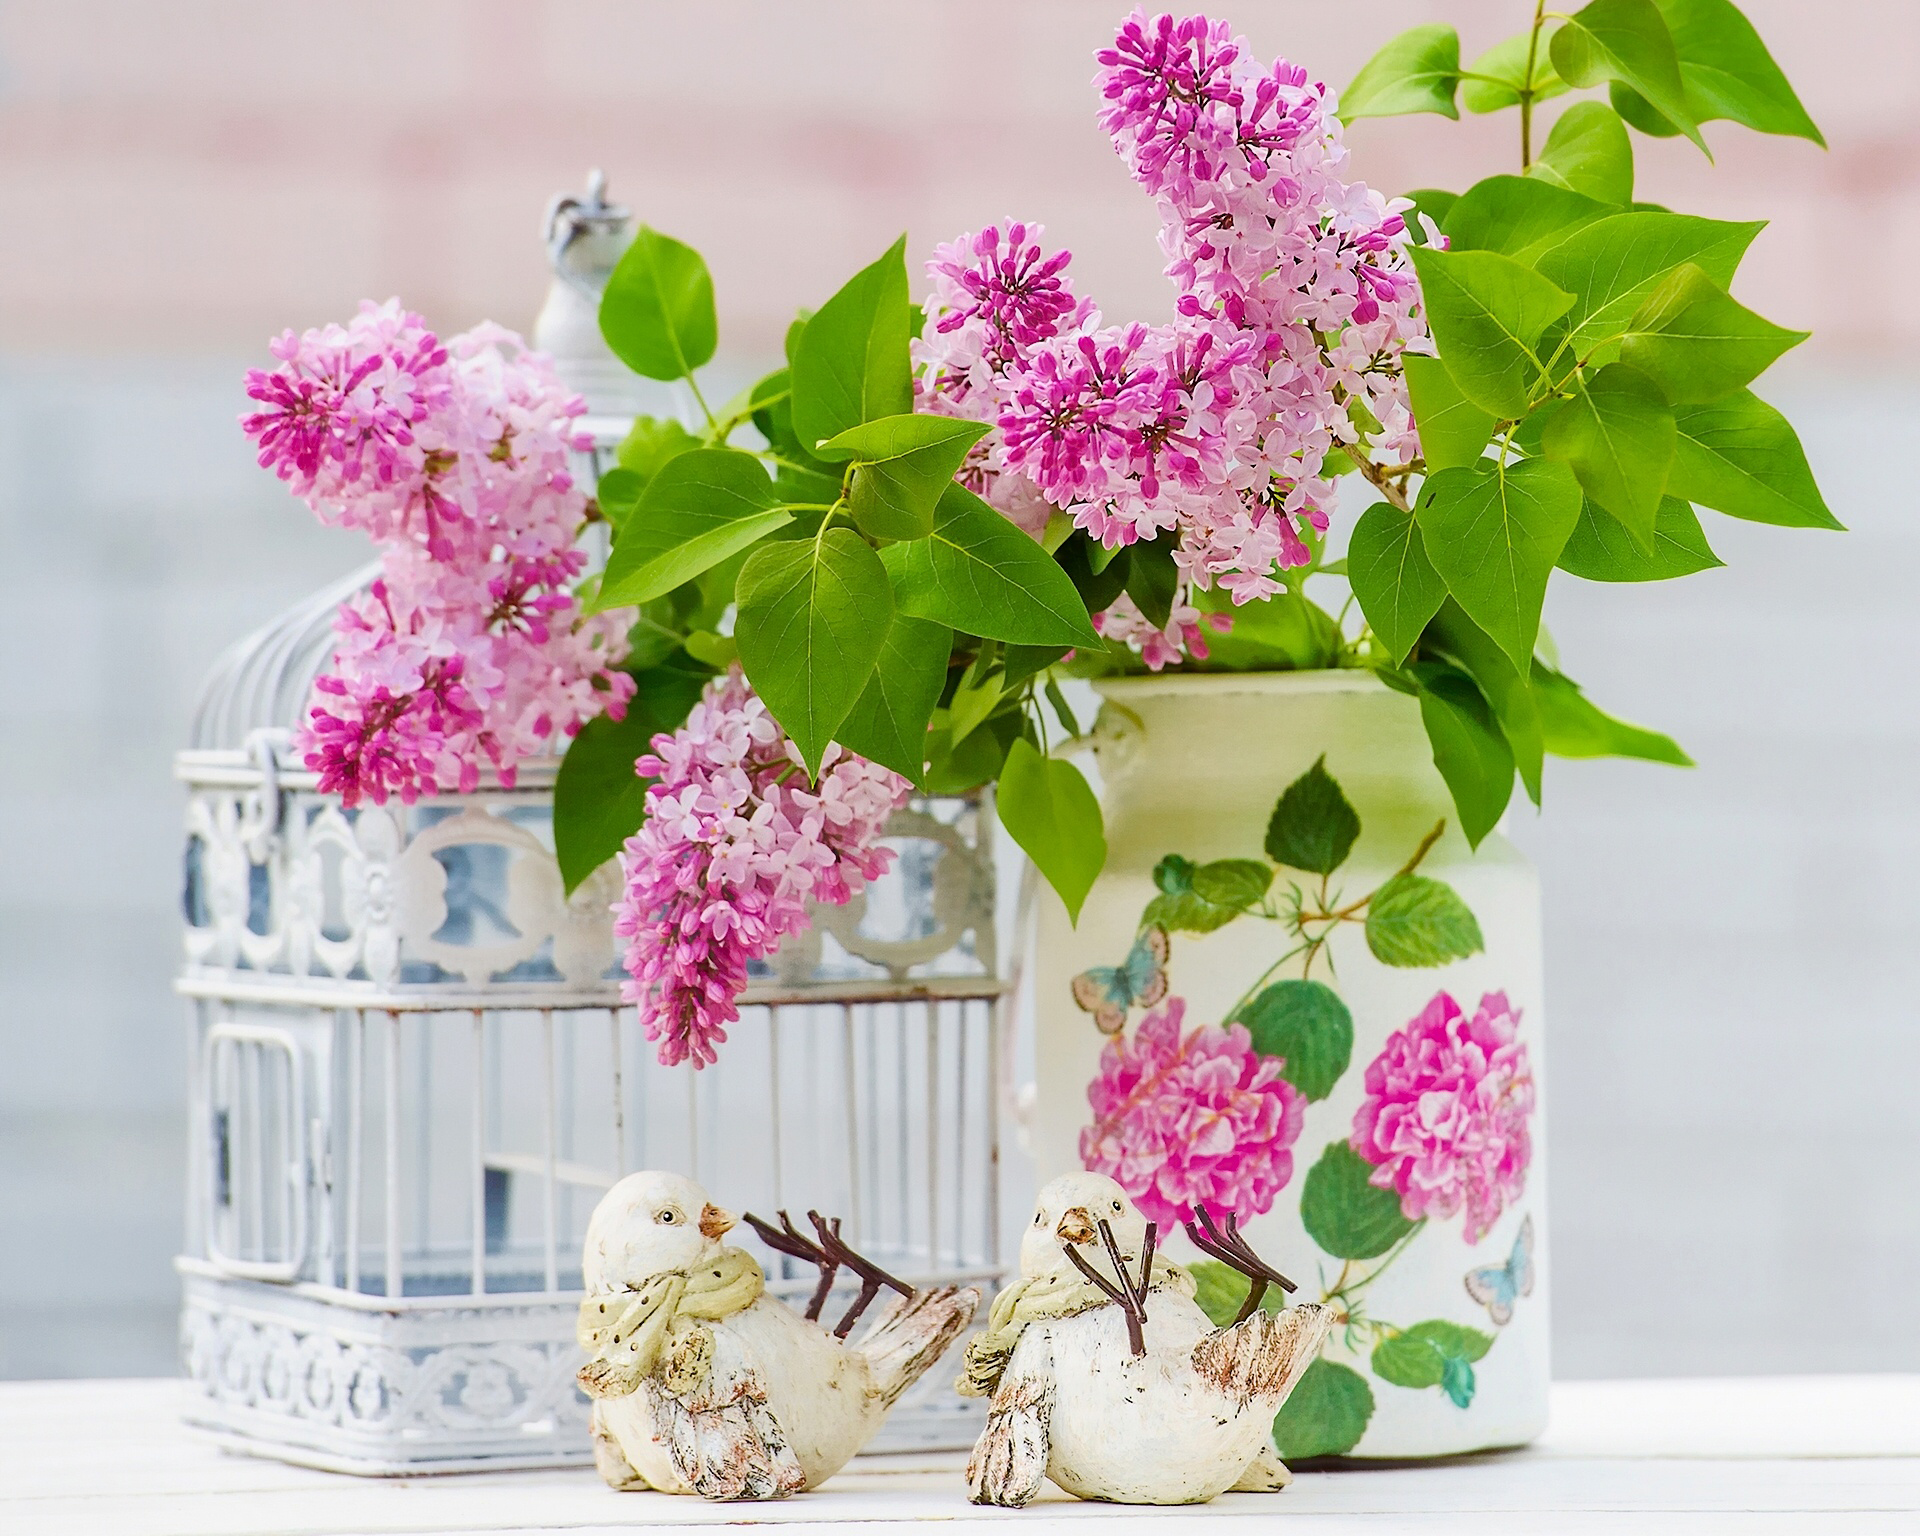 photography, still life, birdcage, lilac, pink flower, vase